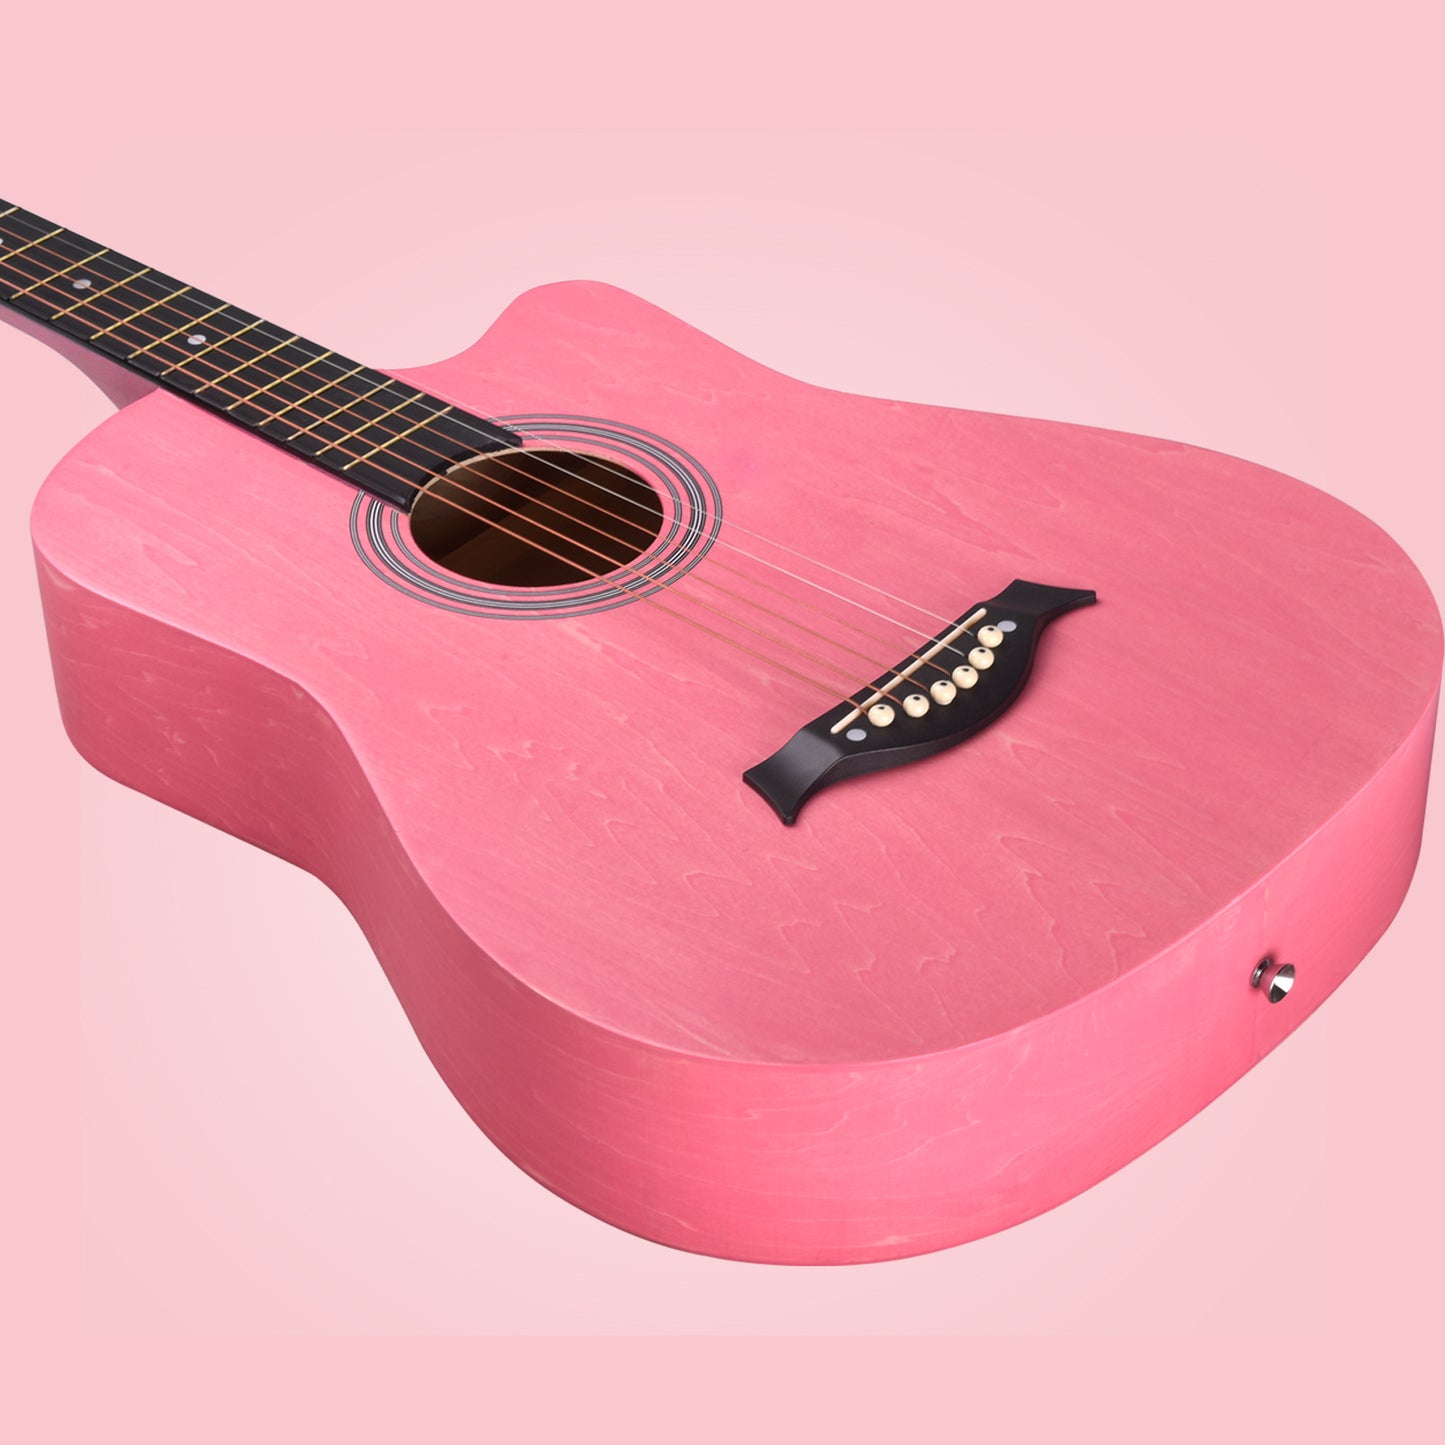 ADM 38" Cutaway Acoustic Guitar Set